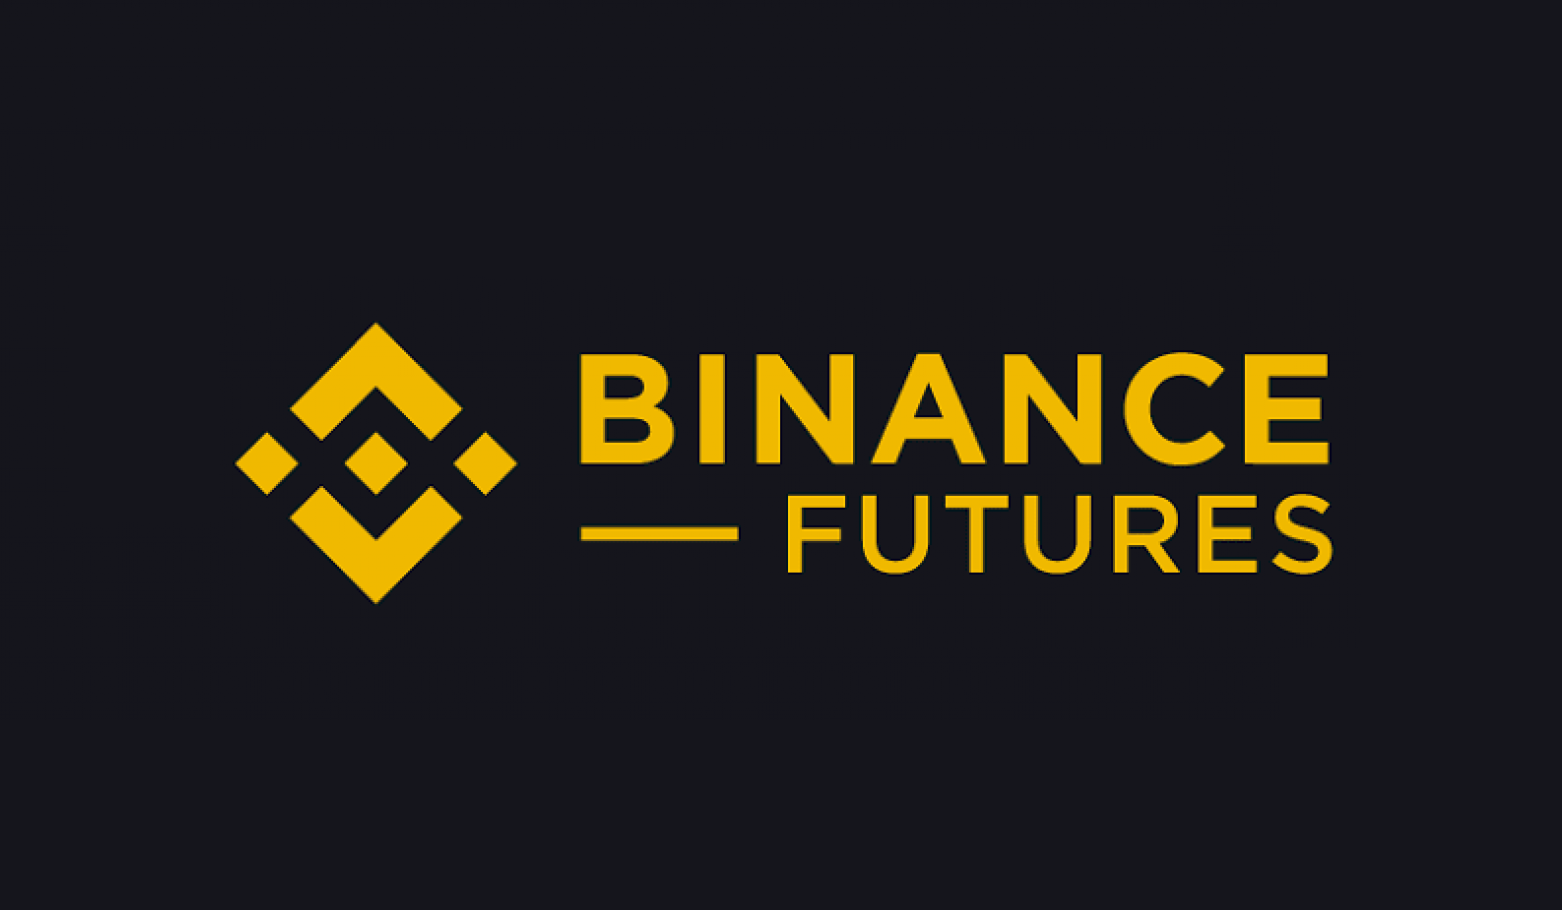 Binance Futures is already more popular than BITMEX